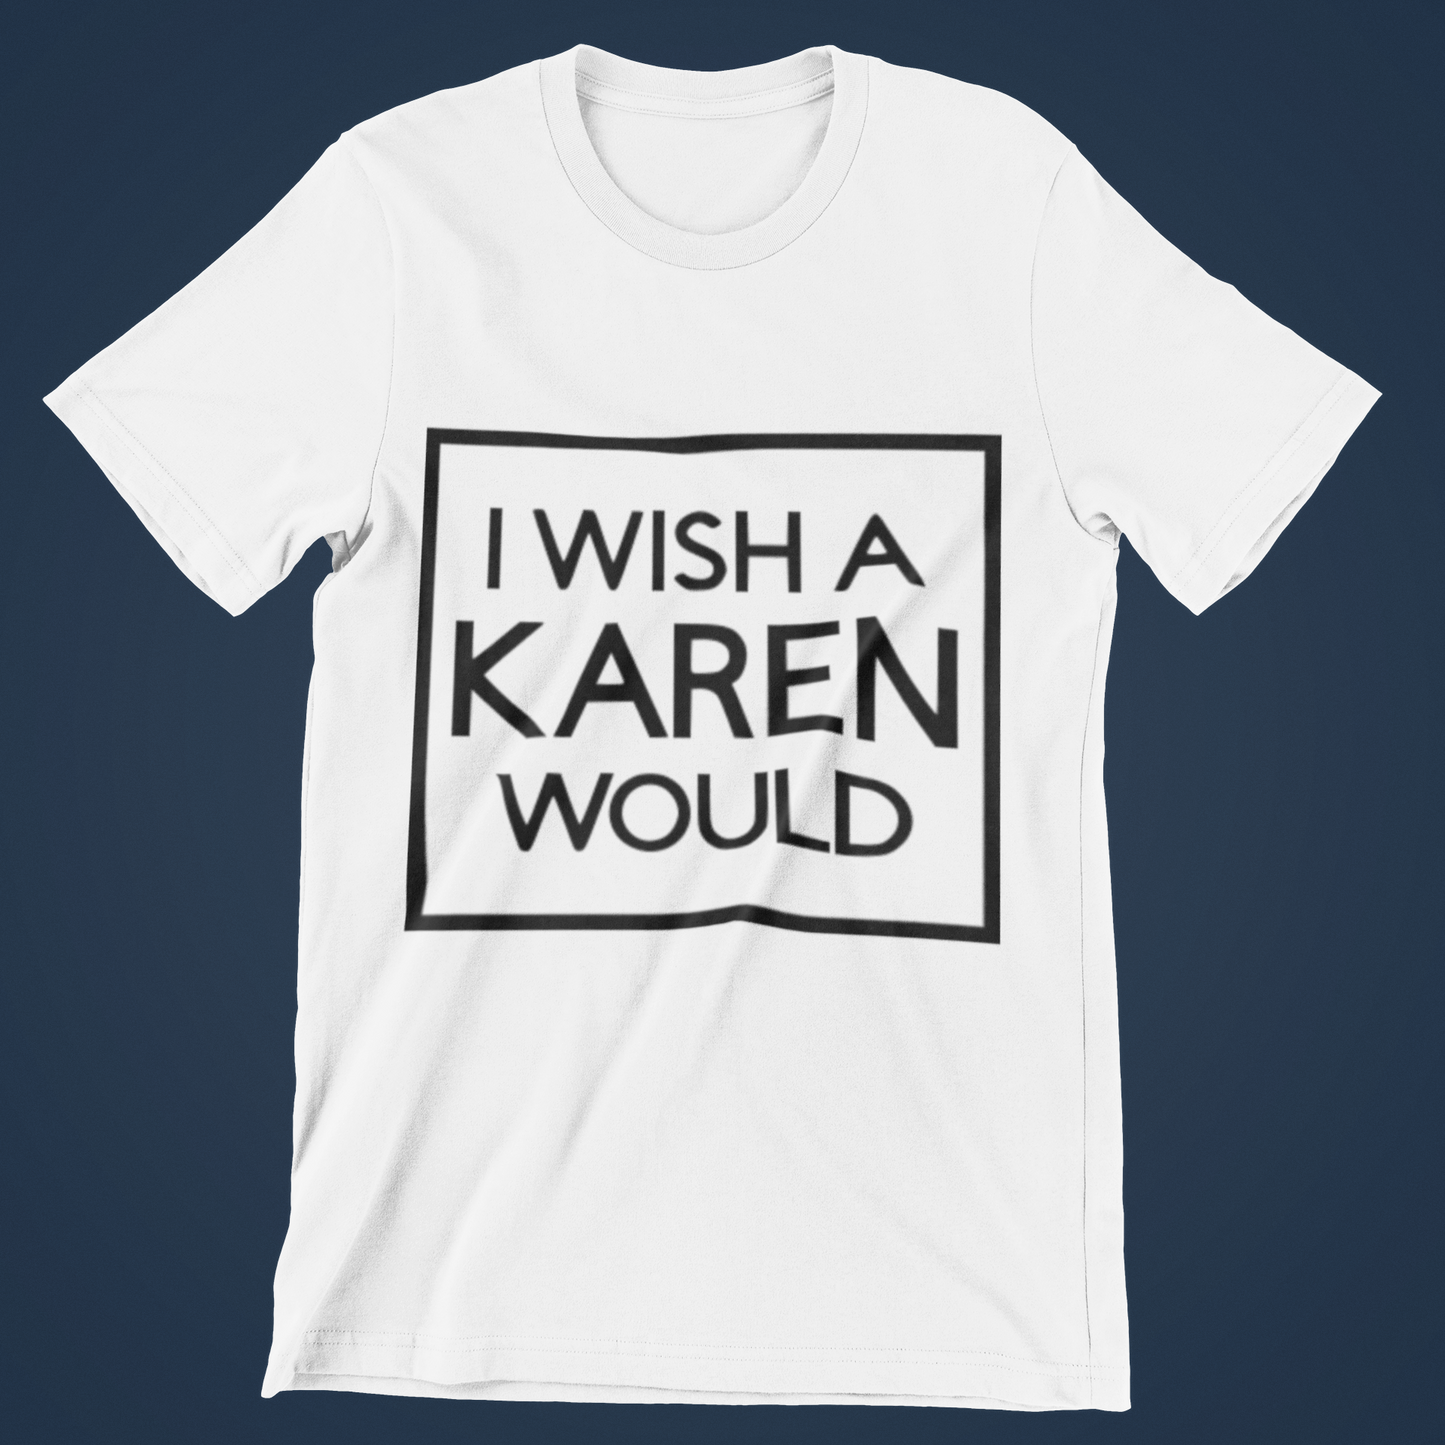 I Wish a Karen Would